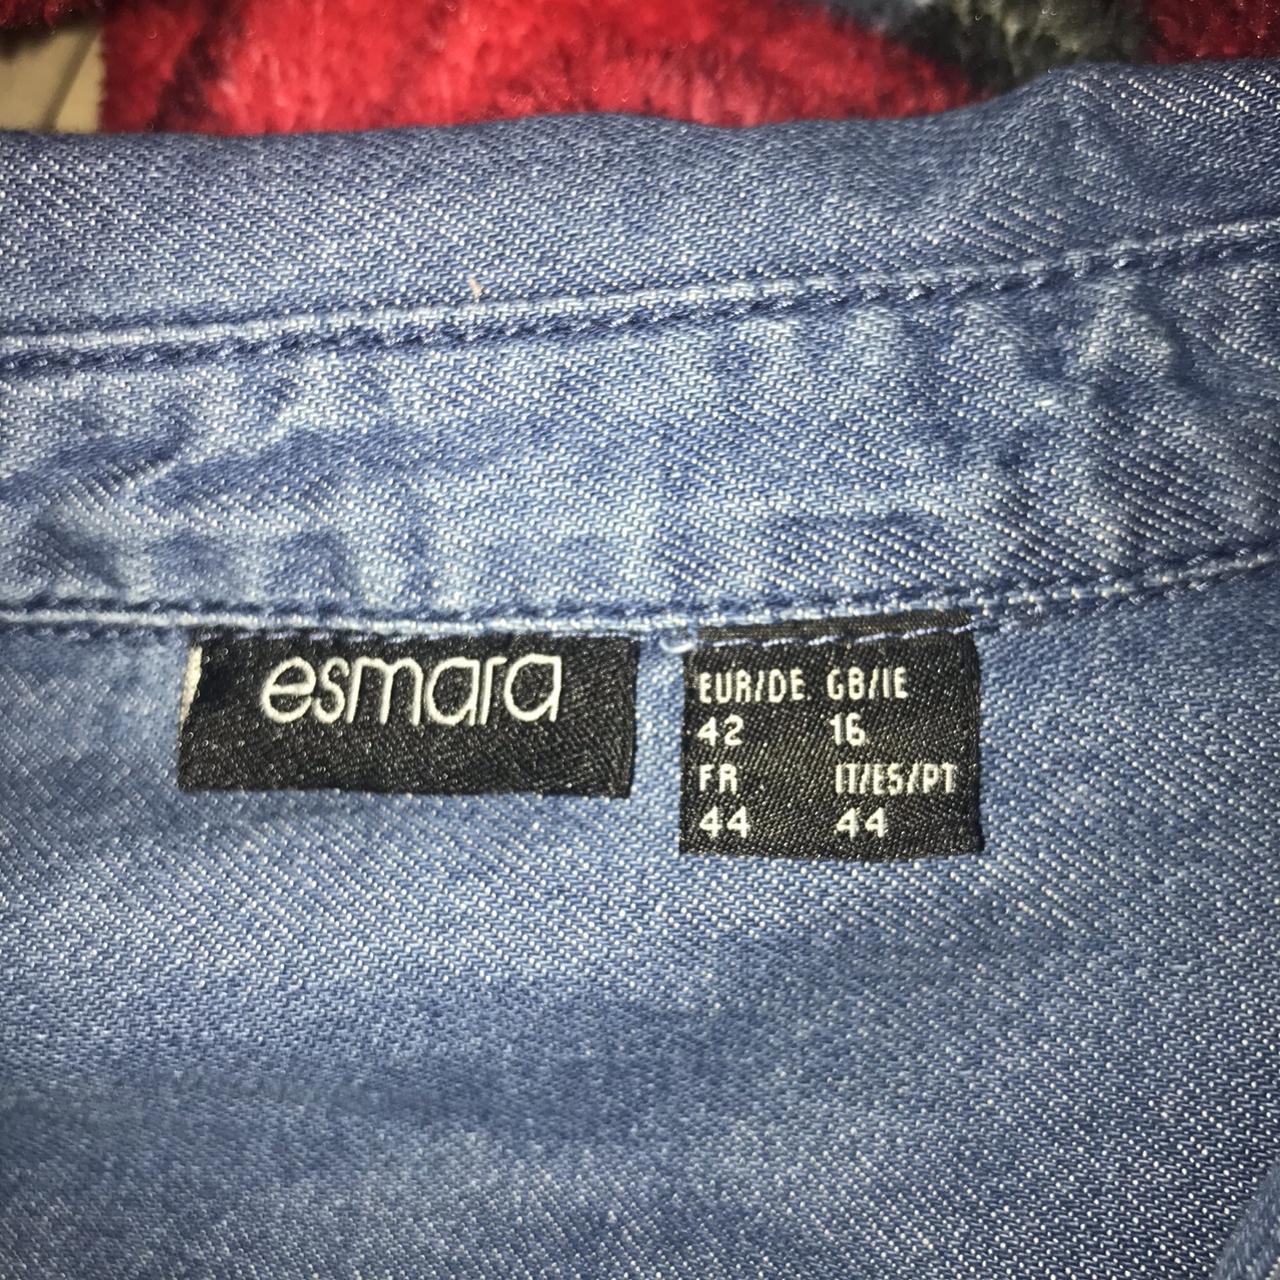 Esmara brand denim shirt, rarely worn., Distressed